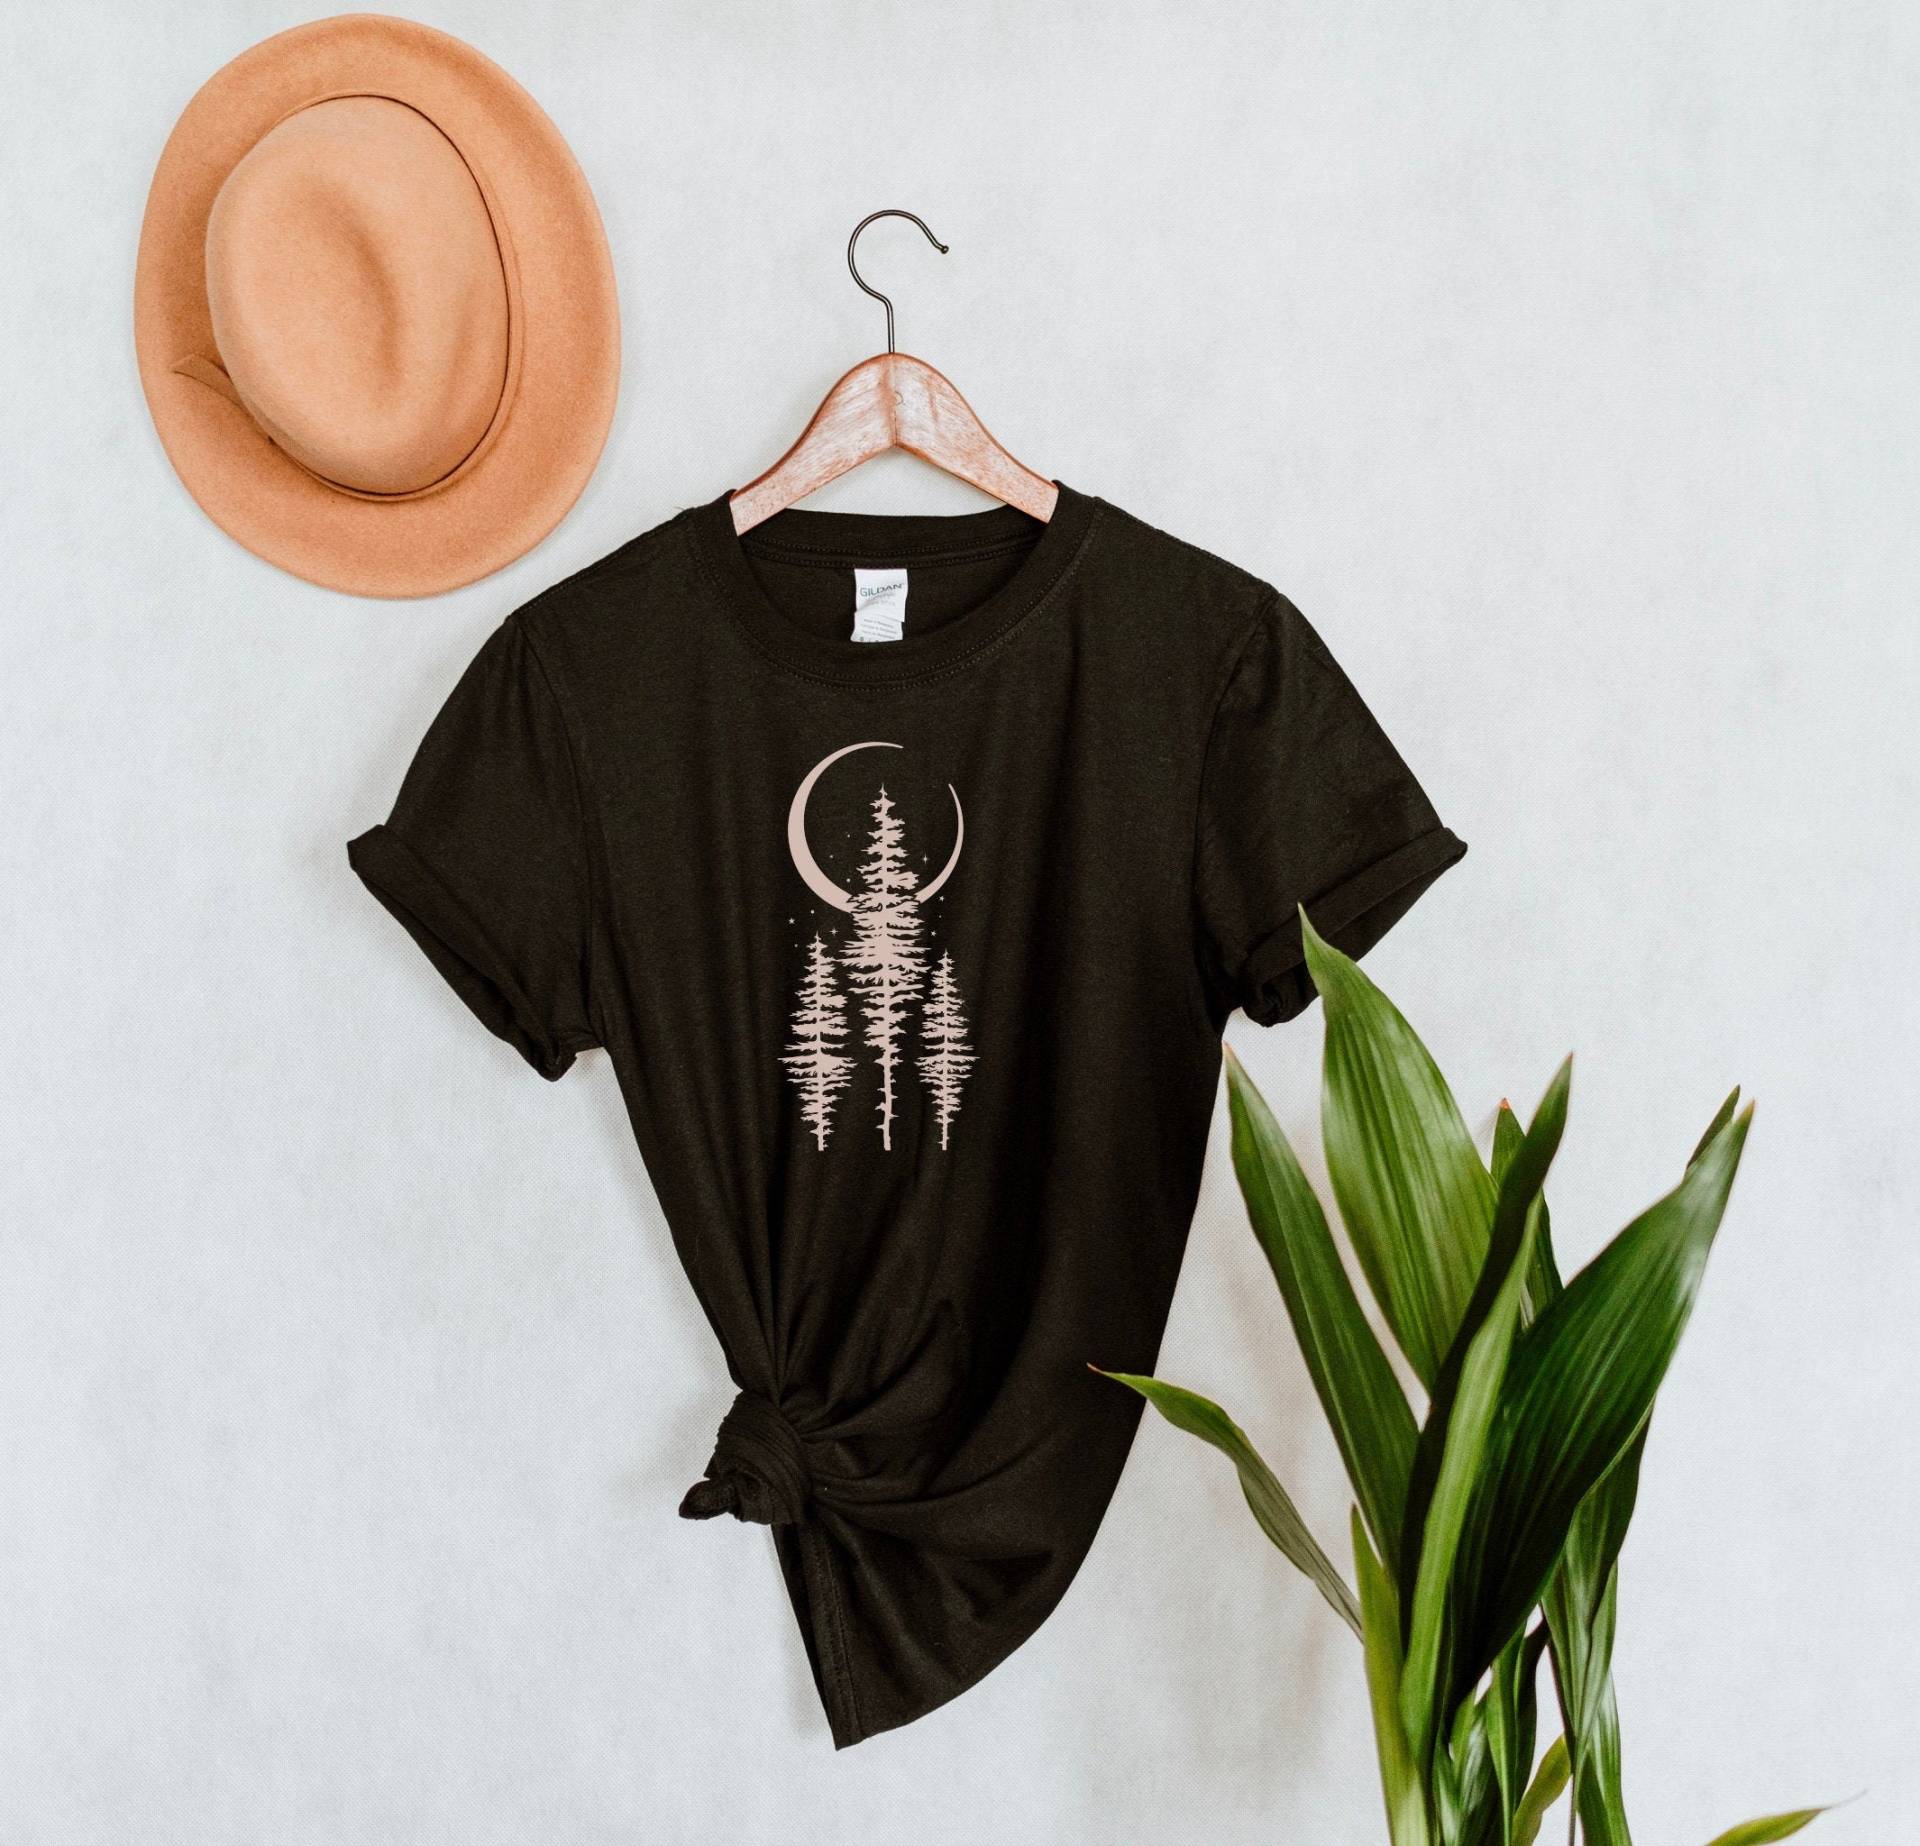 Kiefer Baum T Shirt, Abenteuer Sommer-T-Shirt, Frauen T-Shirt, Outdoor-Shirt, Wander-Shirt von MadCityCollectibles